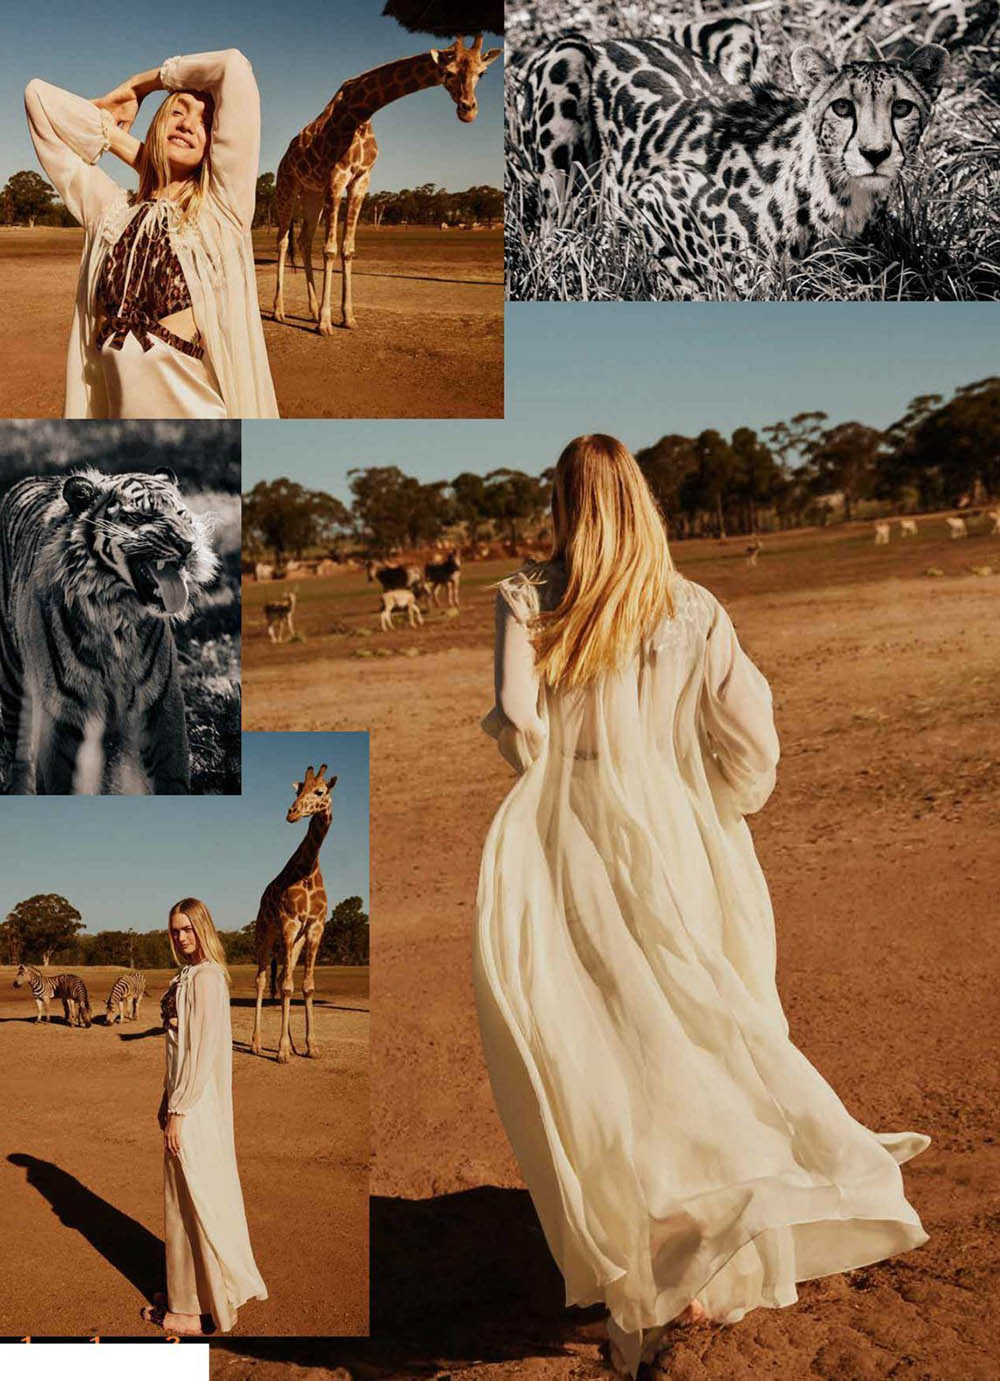 Gemma-Ward-covers-Harper’s-Bazaar-Australia-December-2018-by-Georges-Antoni-18.jpg